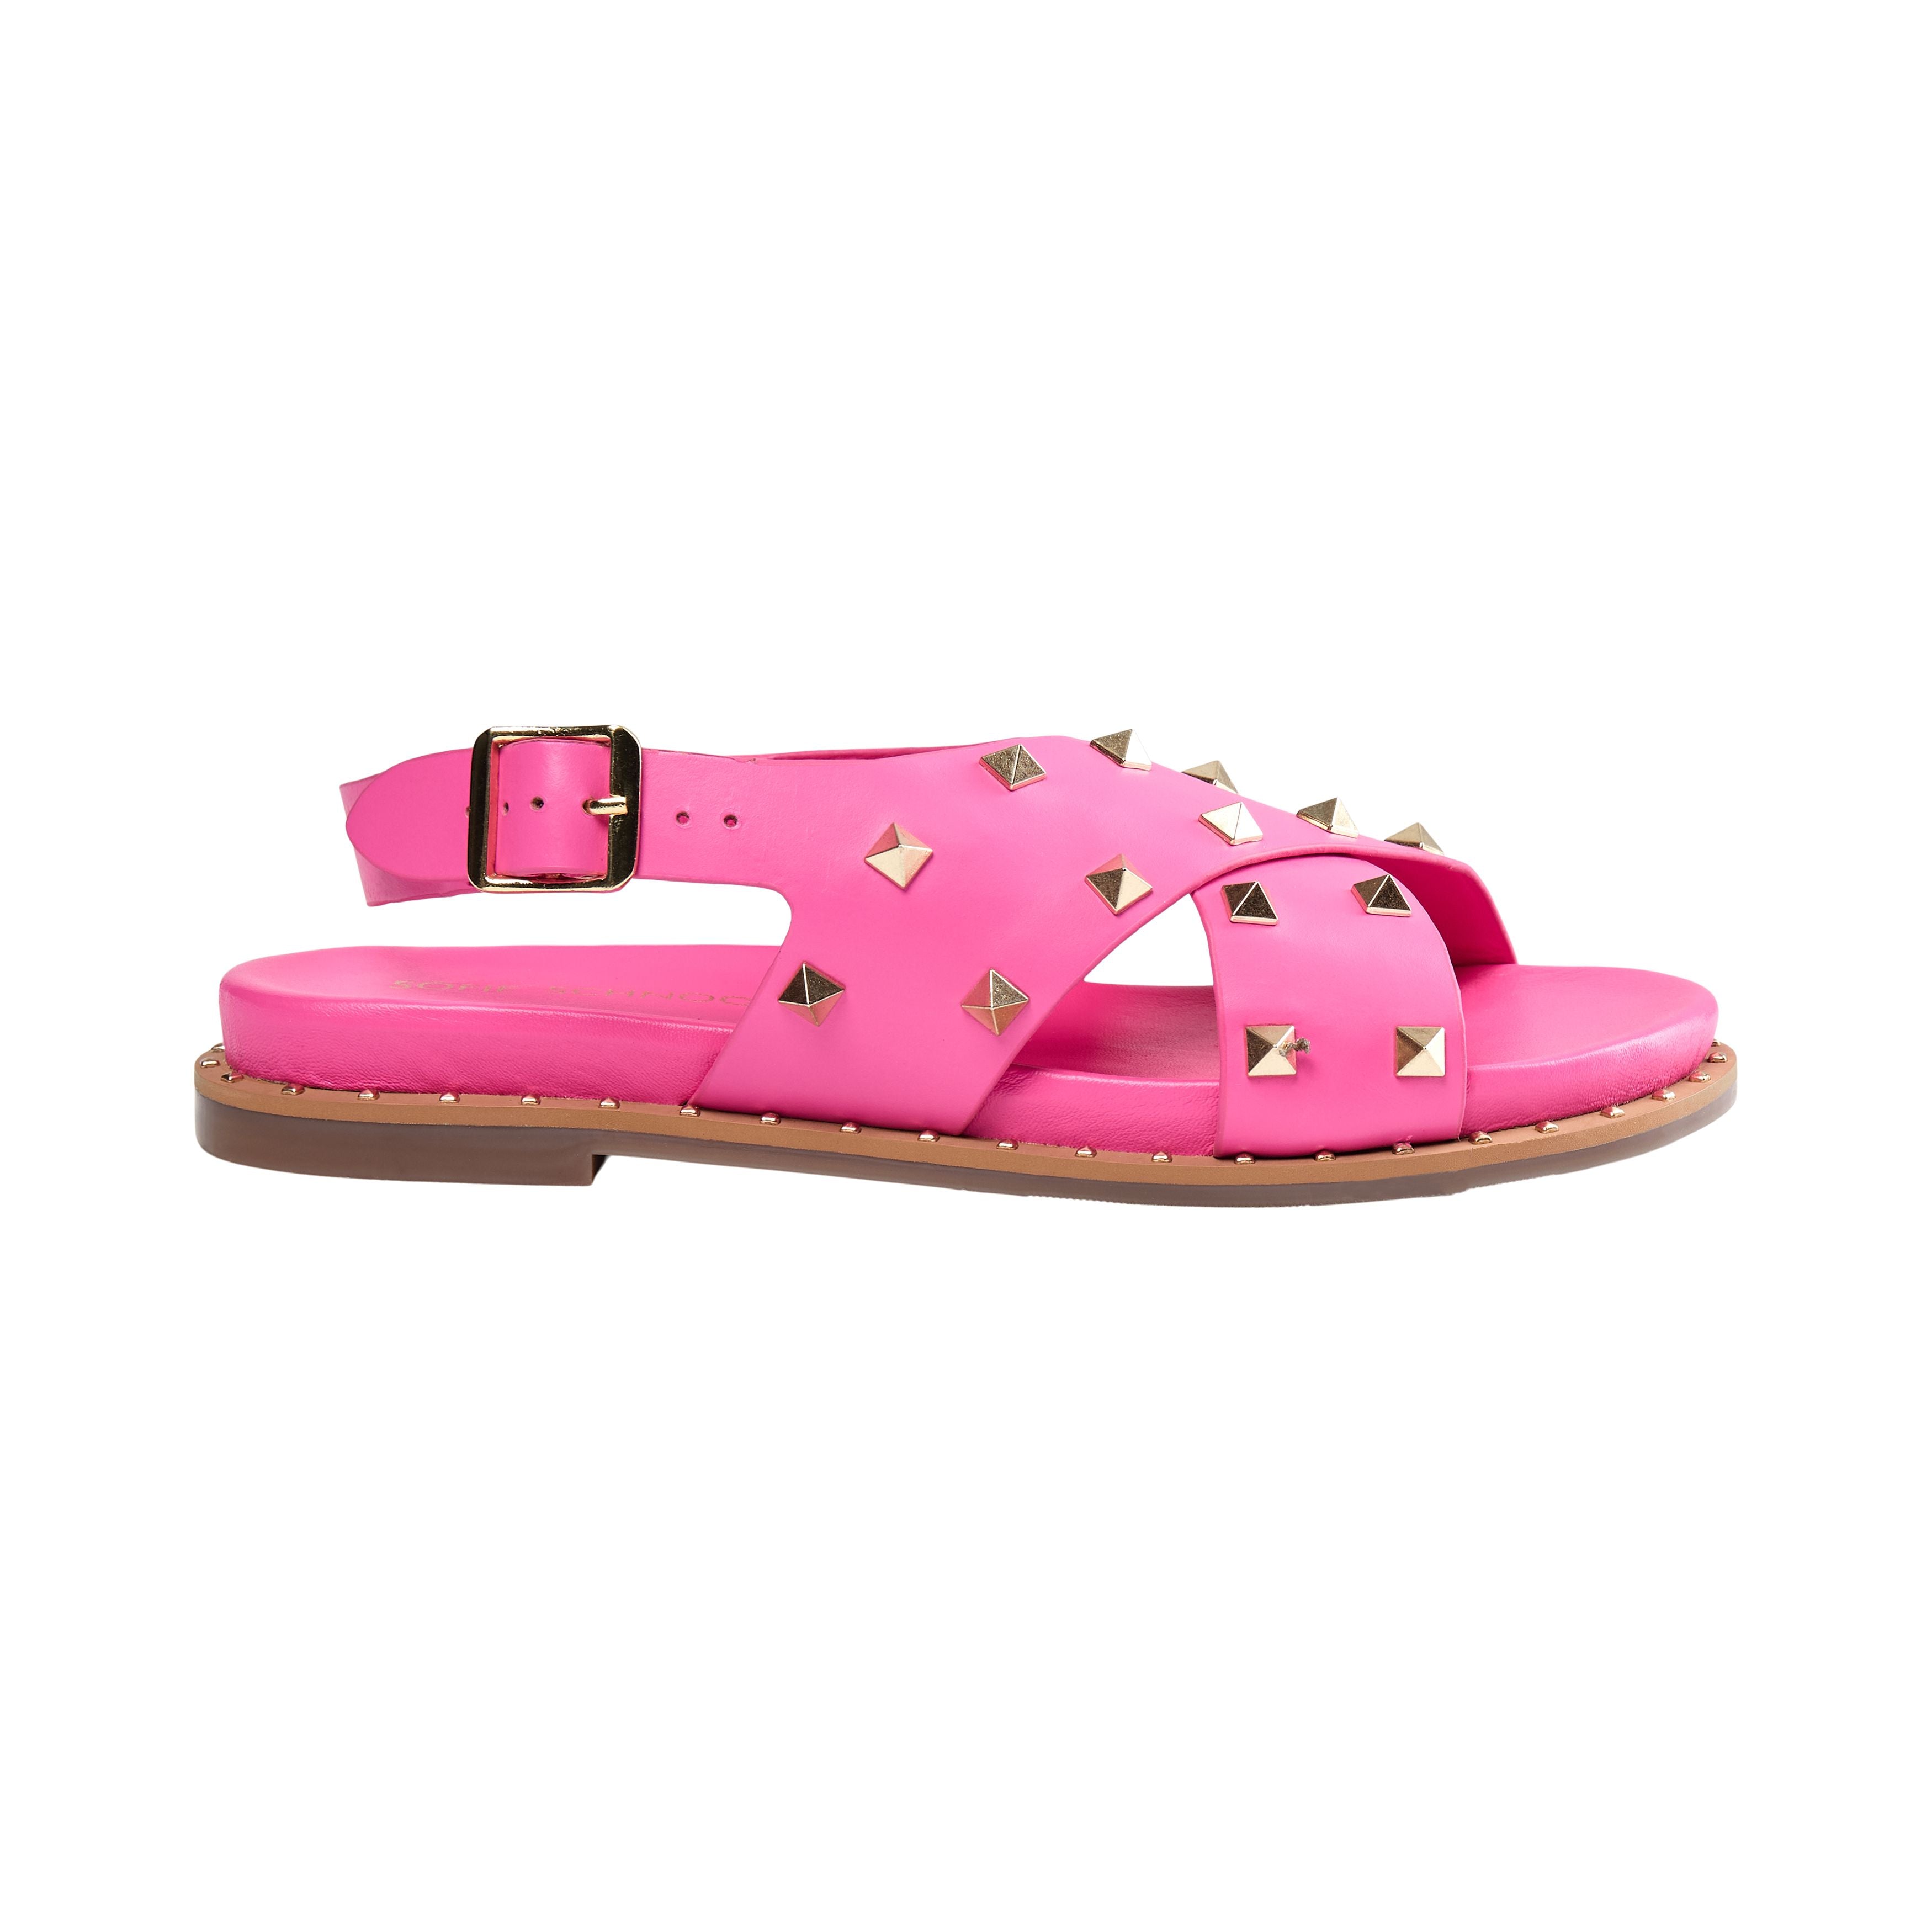 Schnoor - Sandal, Pink